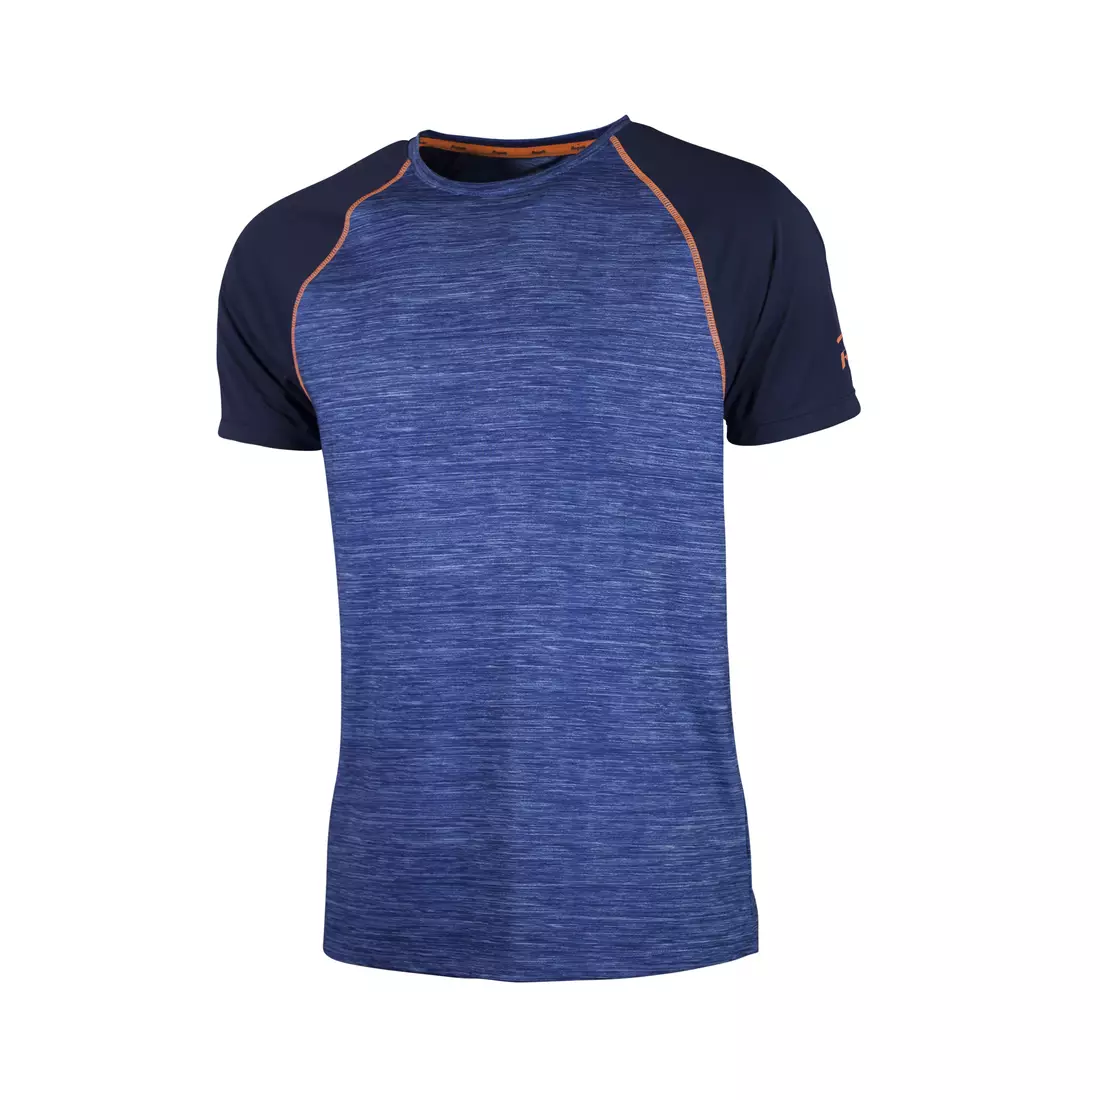 ROGELLI RUN STRUCTURE 830.240 - men's K/R running T-shirt, blue and orange